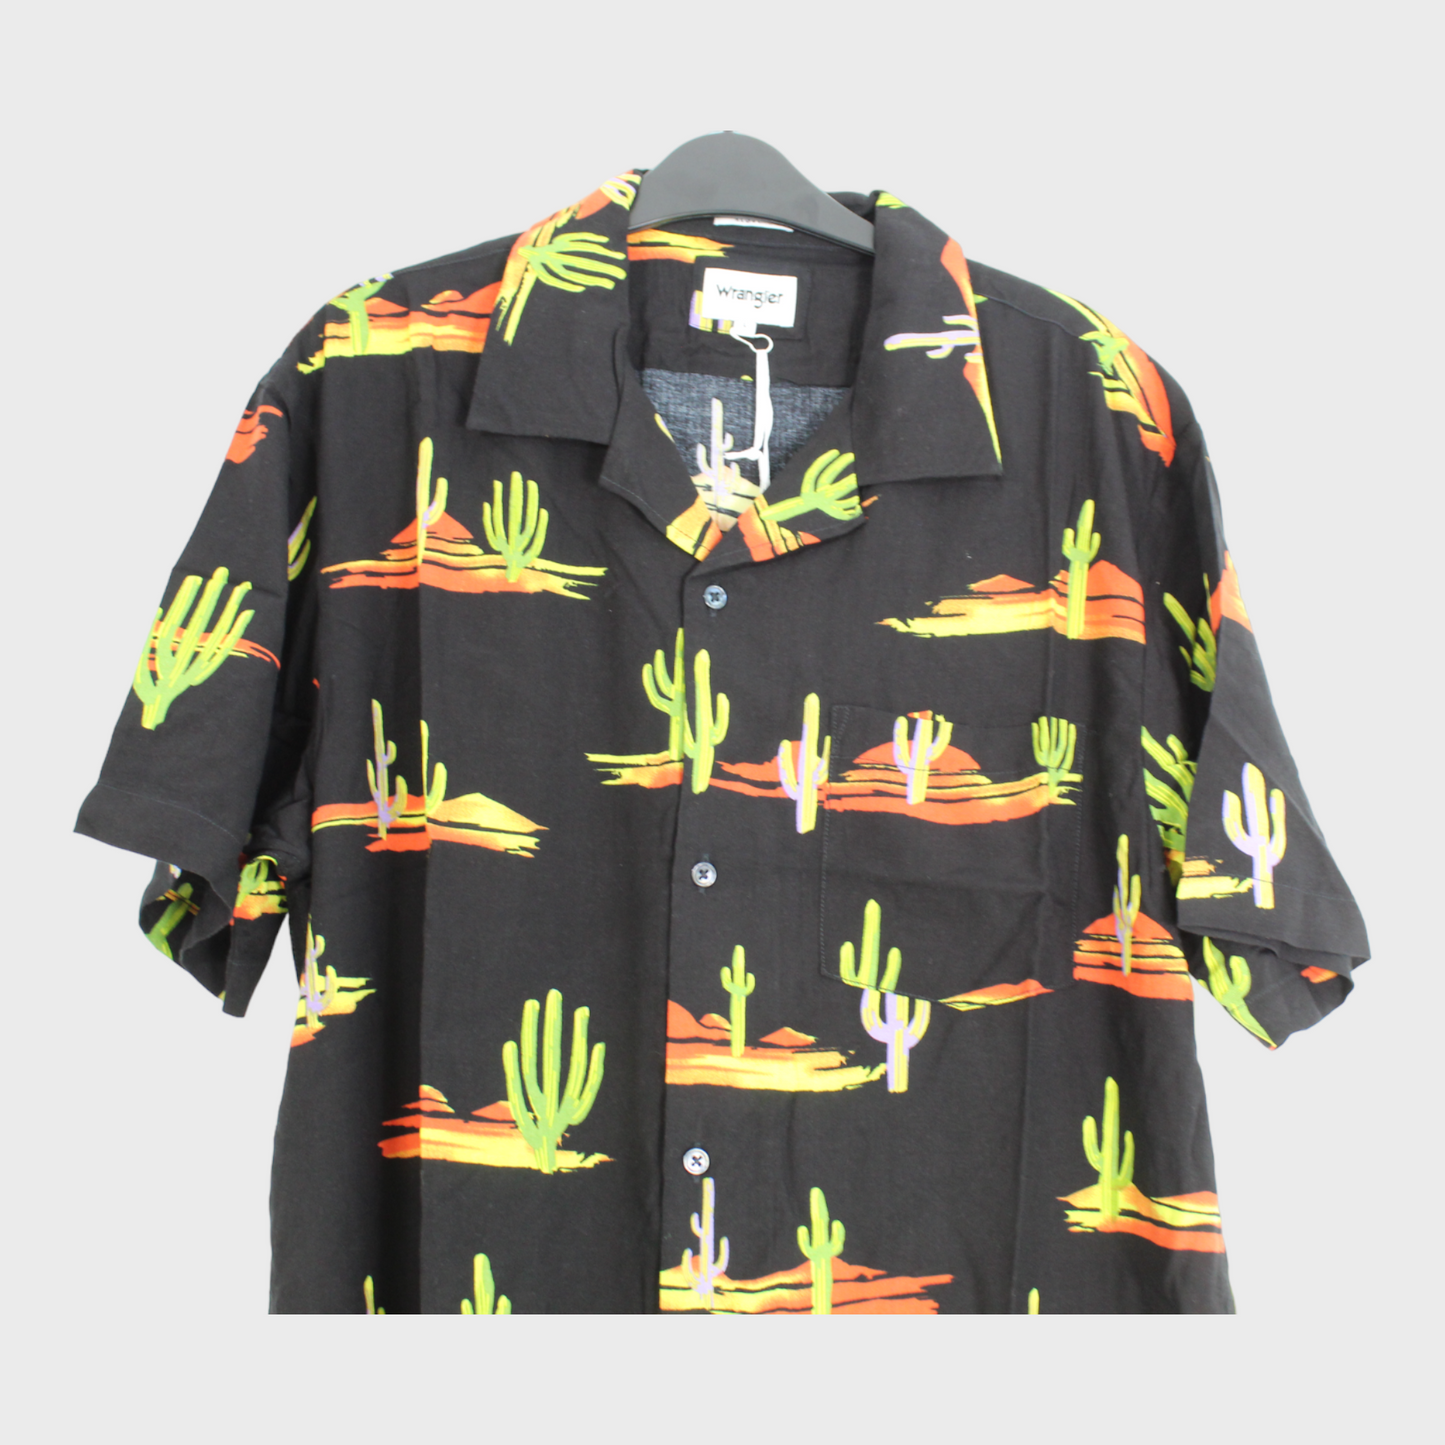 Mens Wrangler Cactus Shirt - Size Large